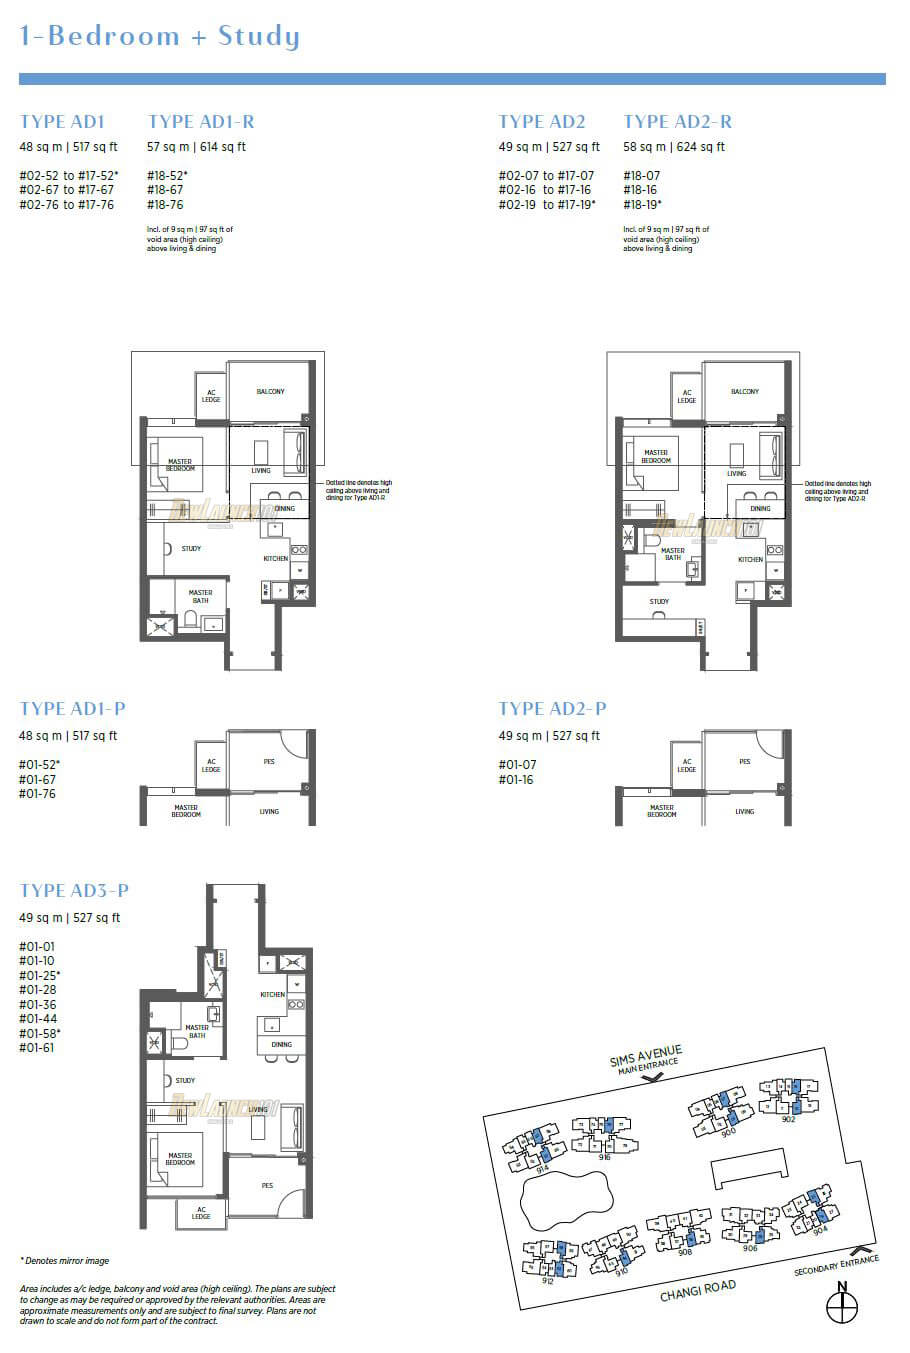 Parc Esta Floor Plan 1-Bedroom Study